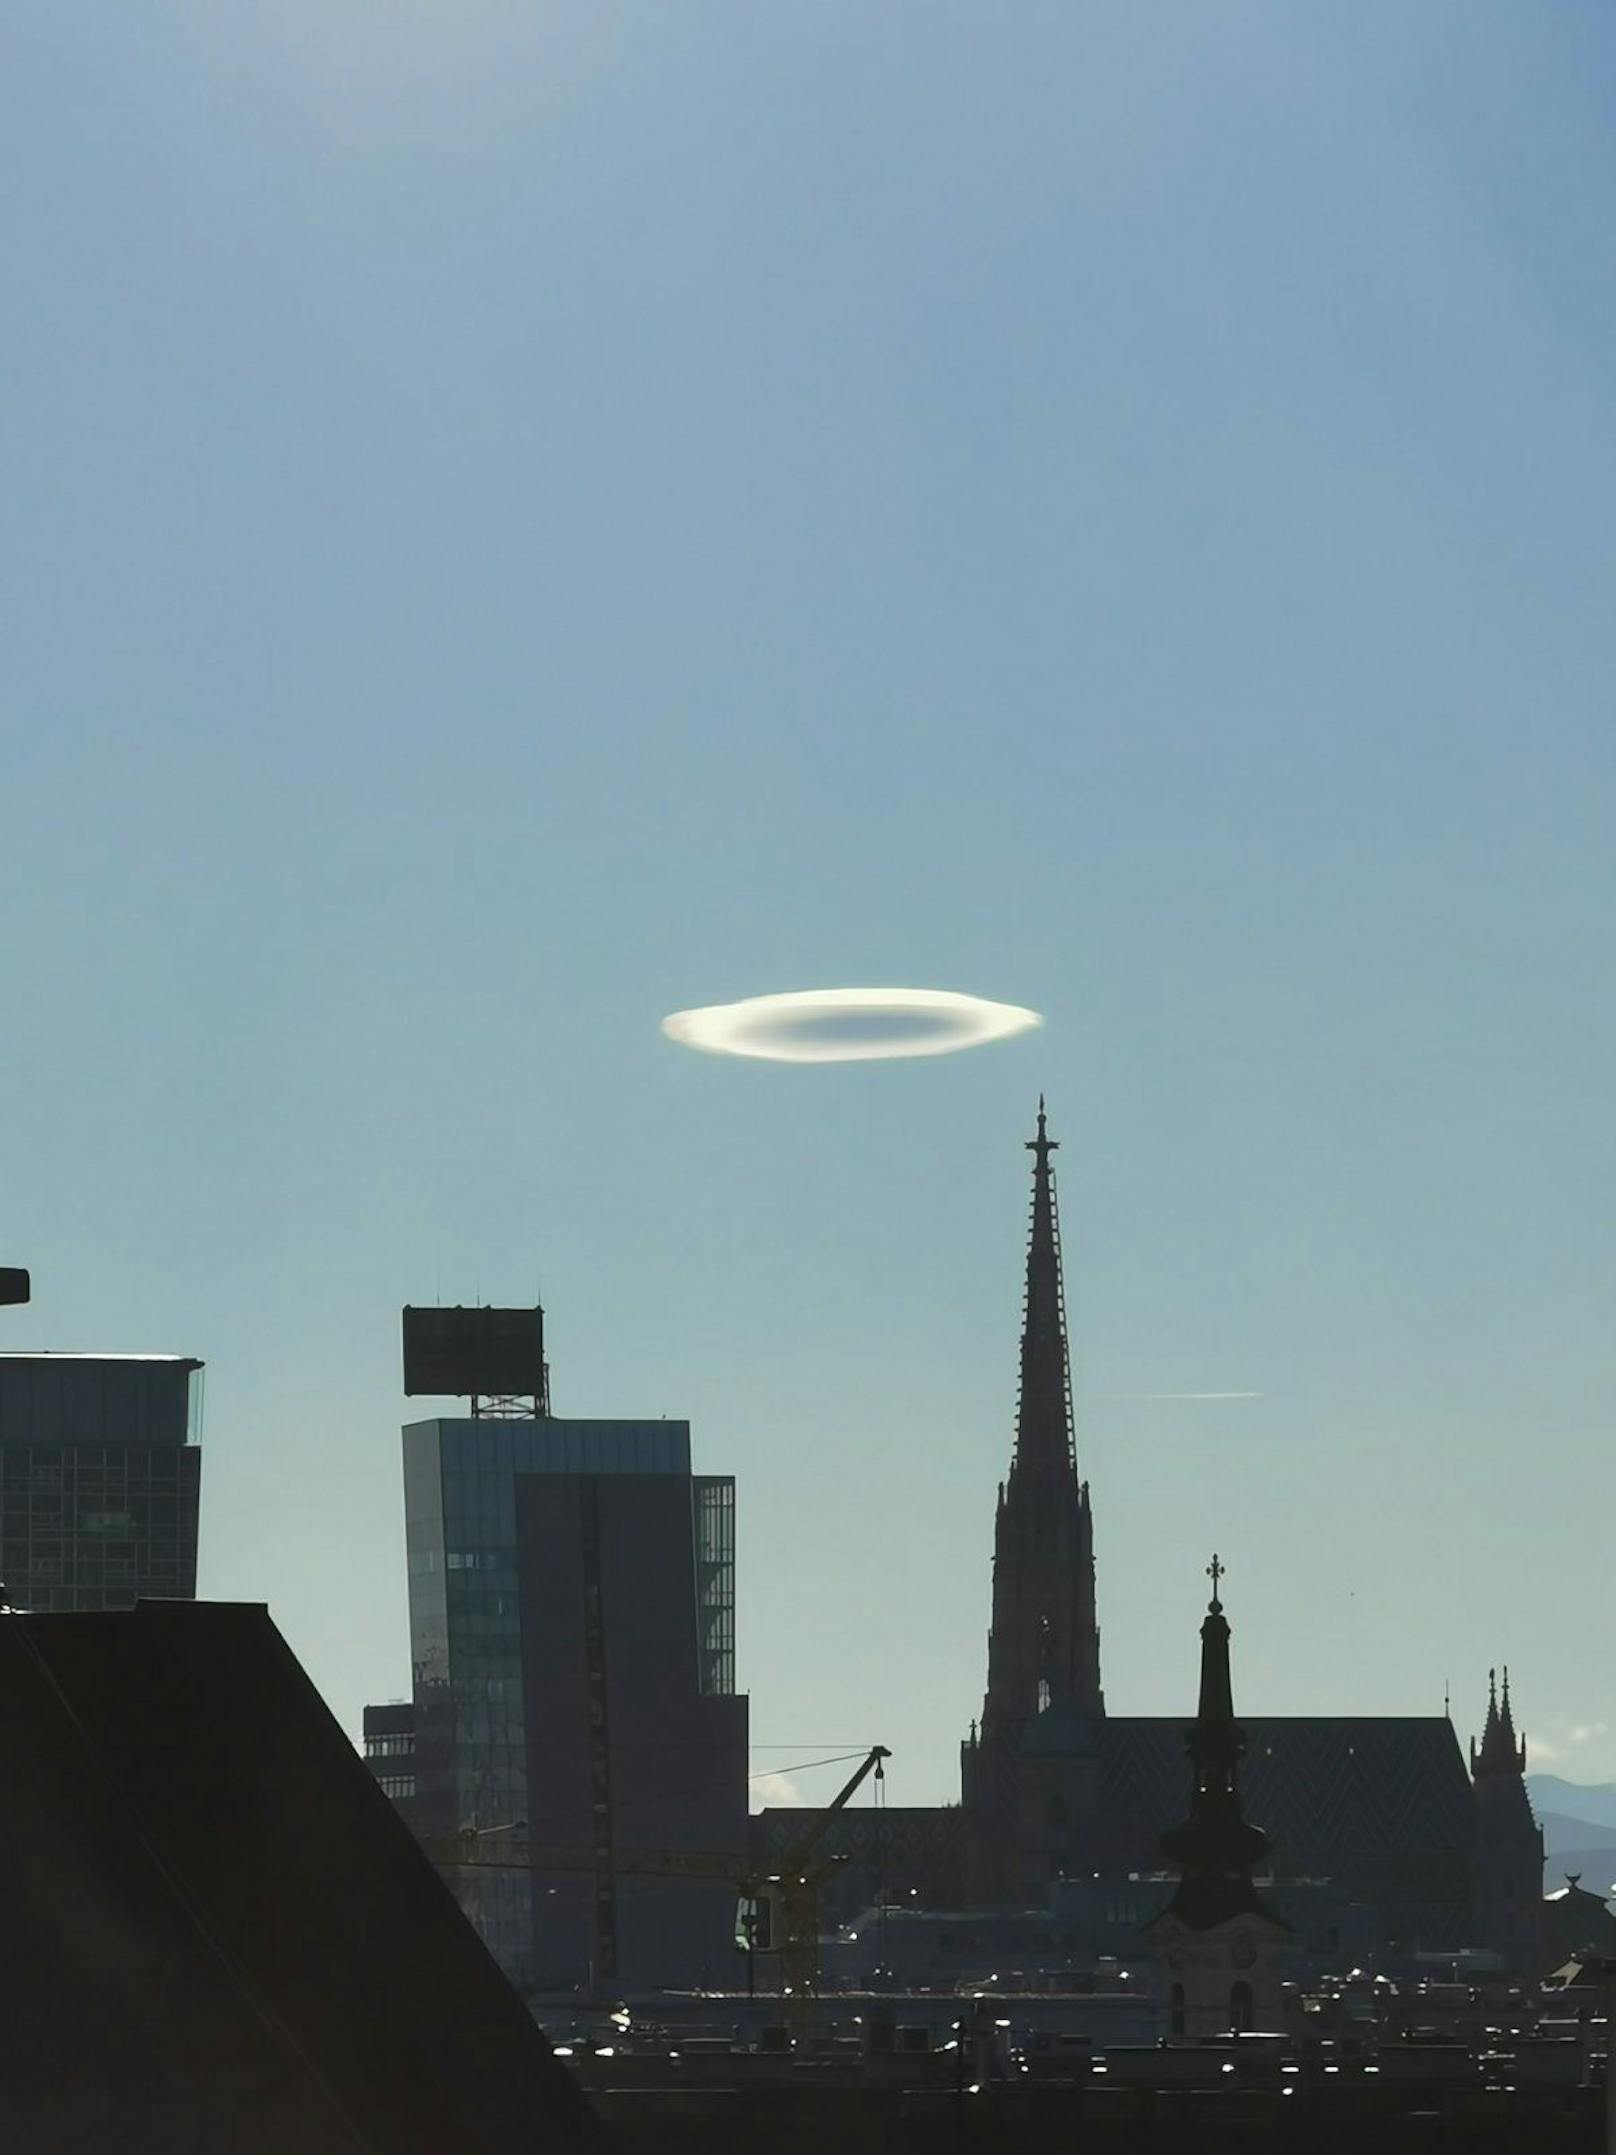 Die "Ufo-Wolke" über Wien